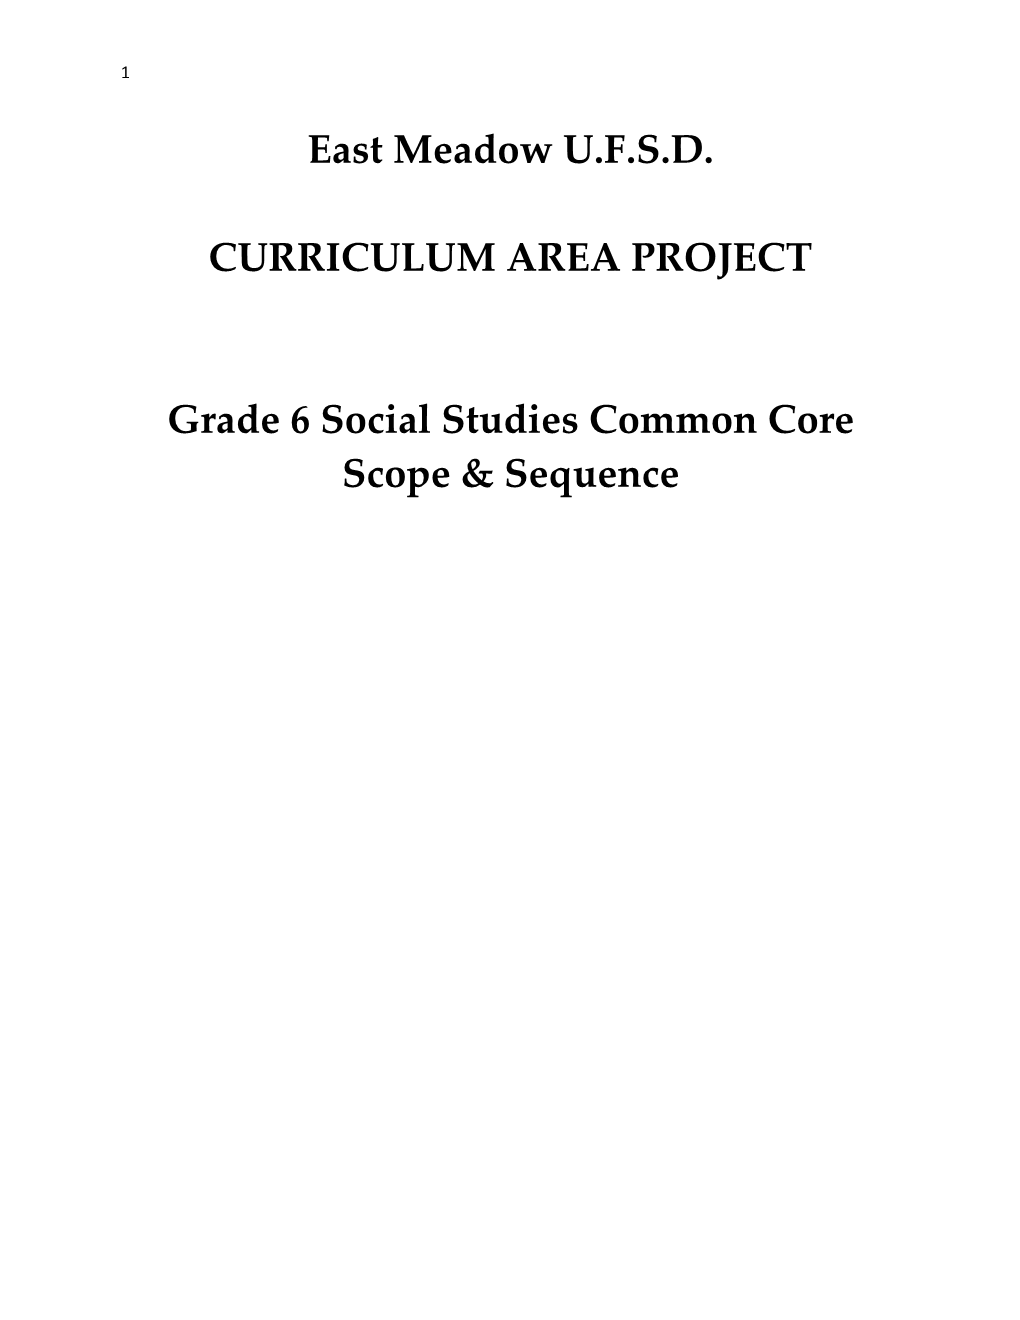 Grade 6 Social Studies Common Core Scope & Sequence